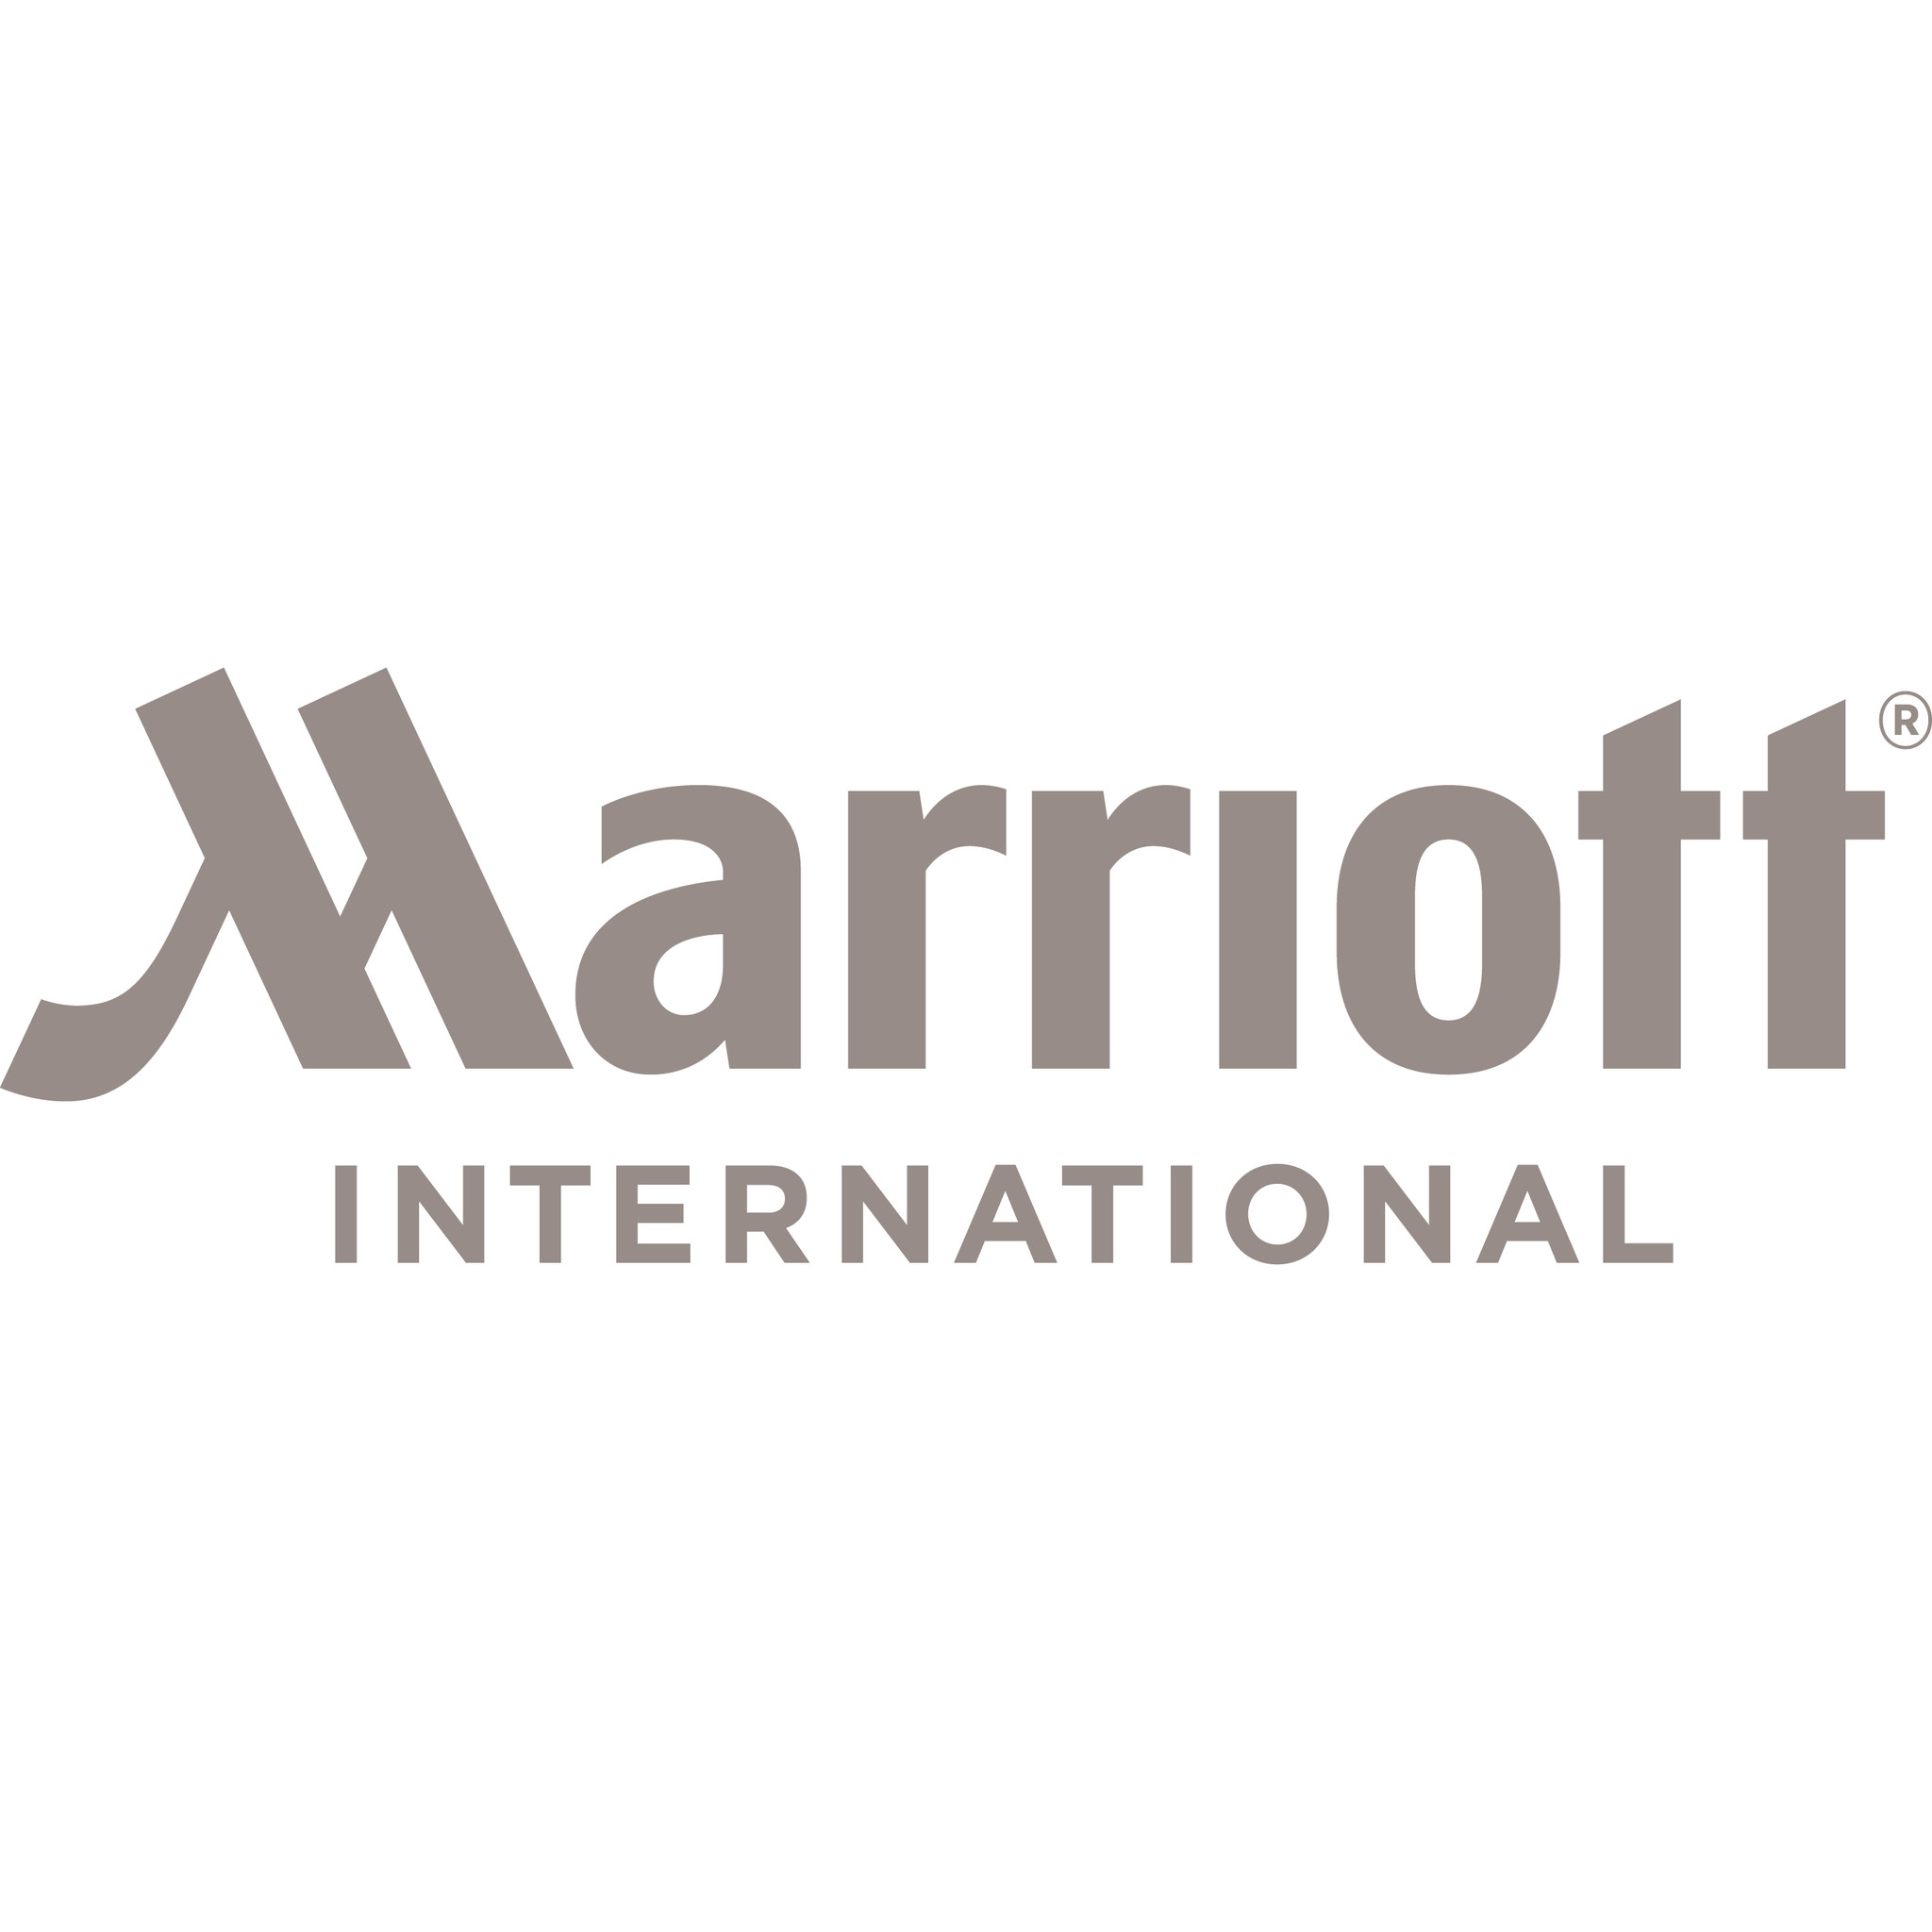 Marriott International Underscores Its Focus In Driving Innovation In